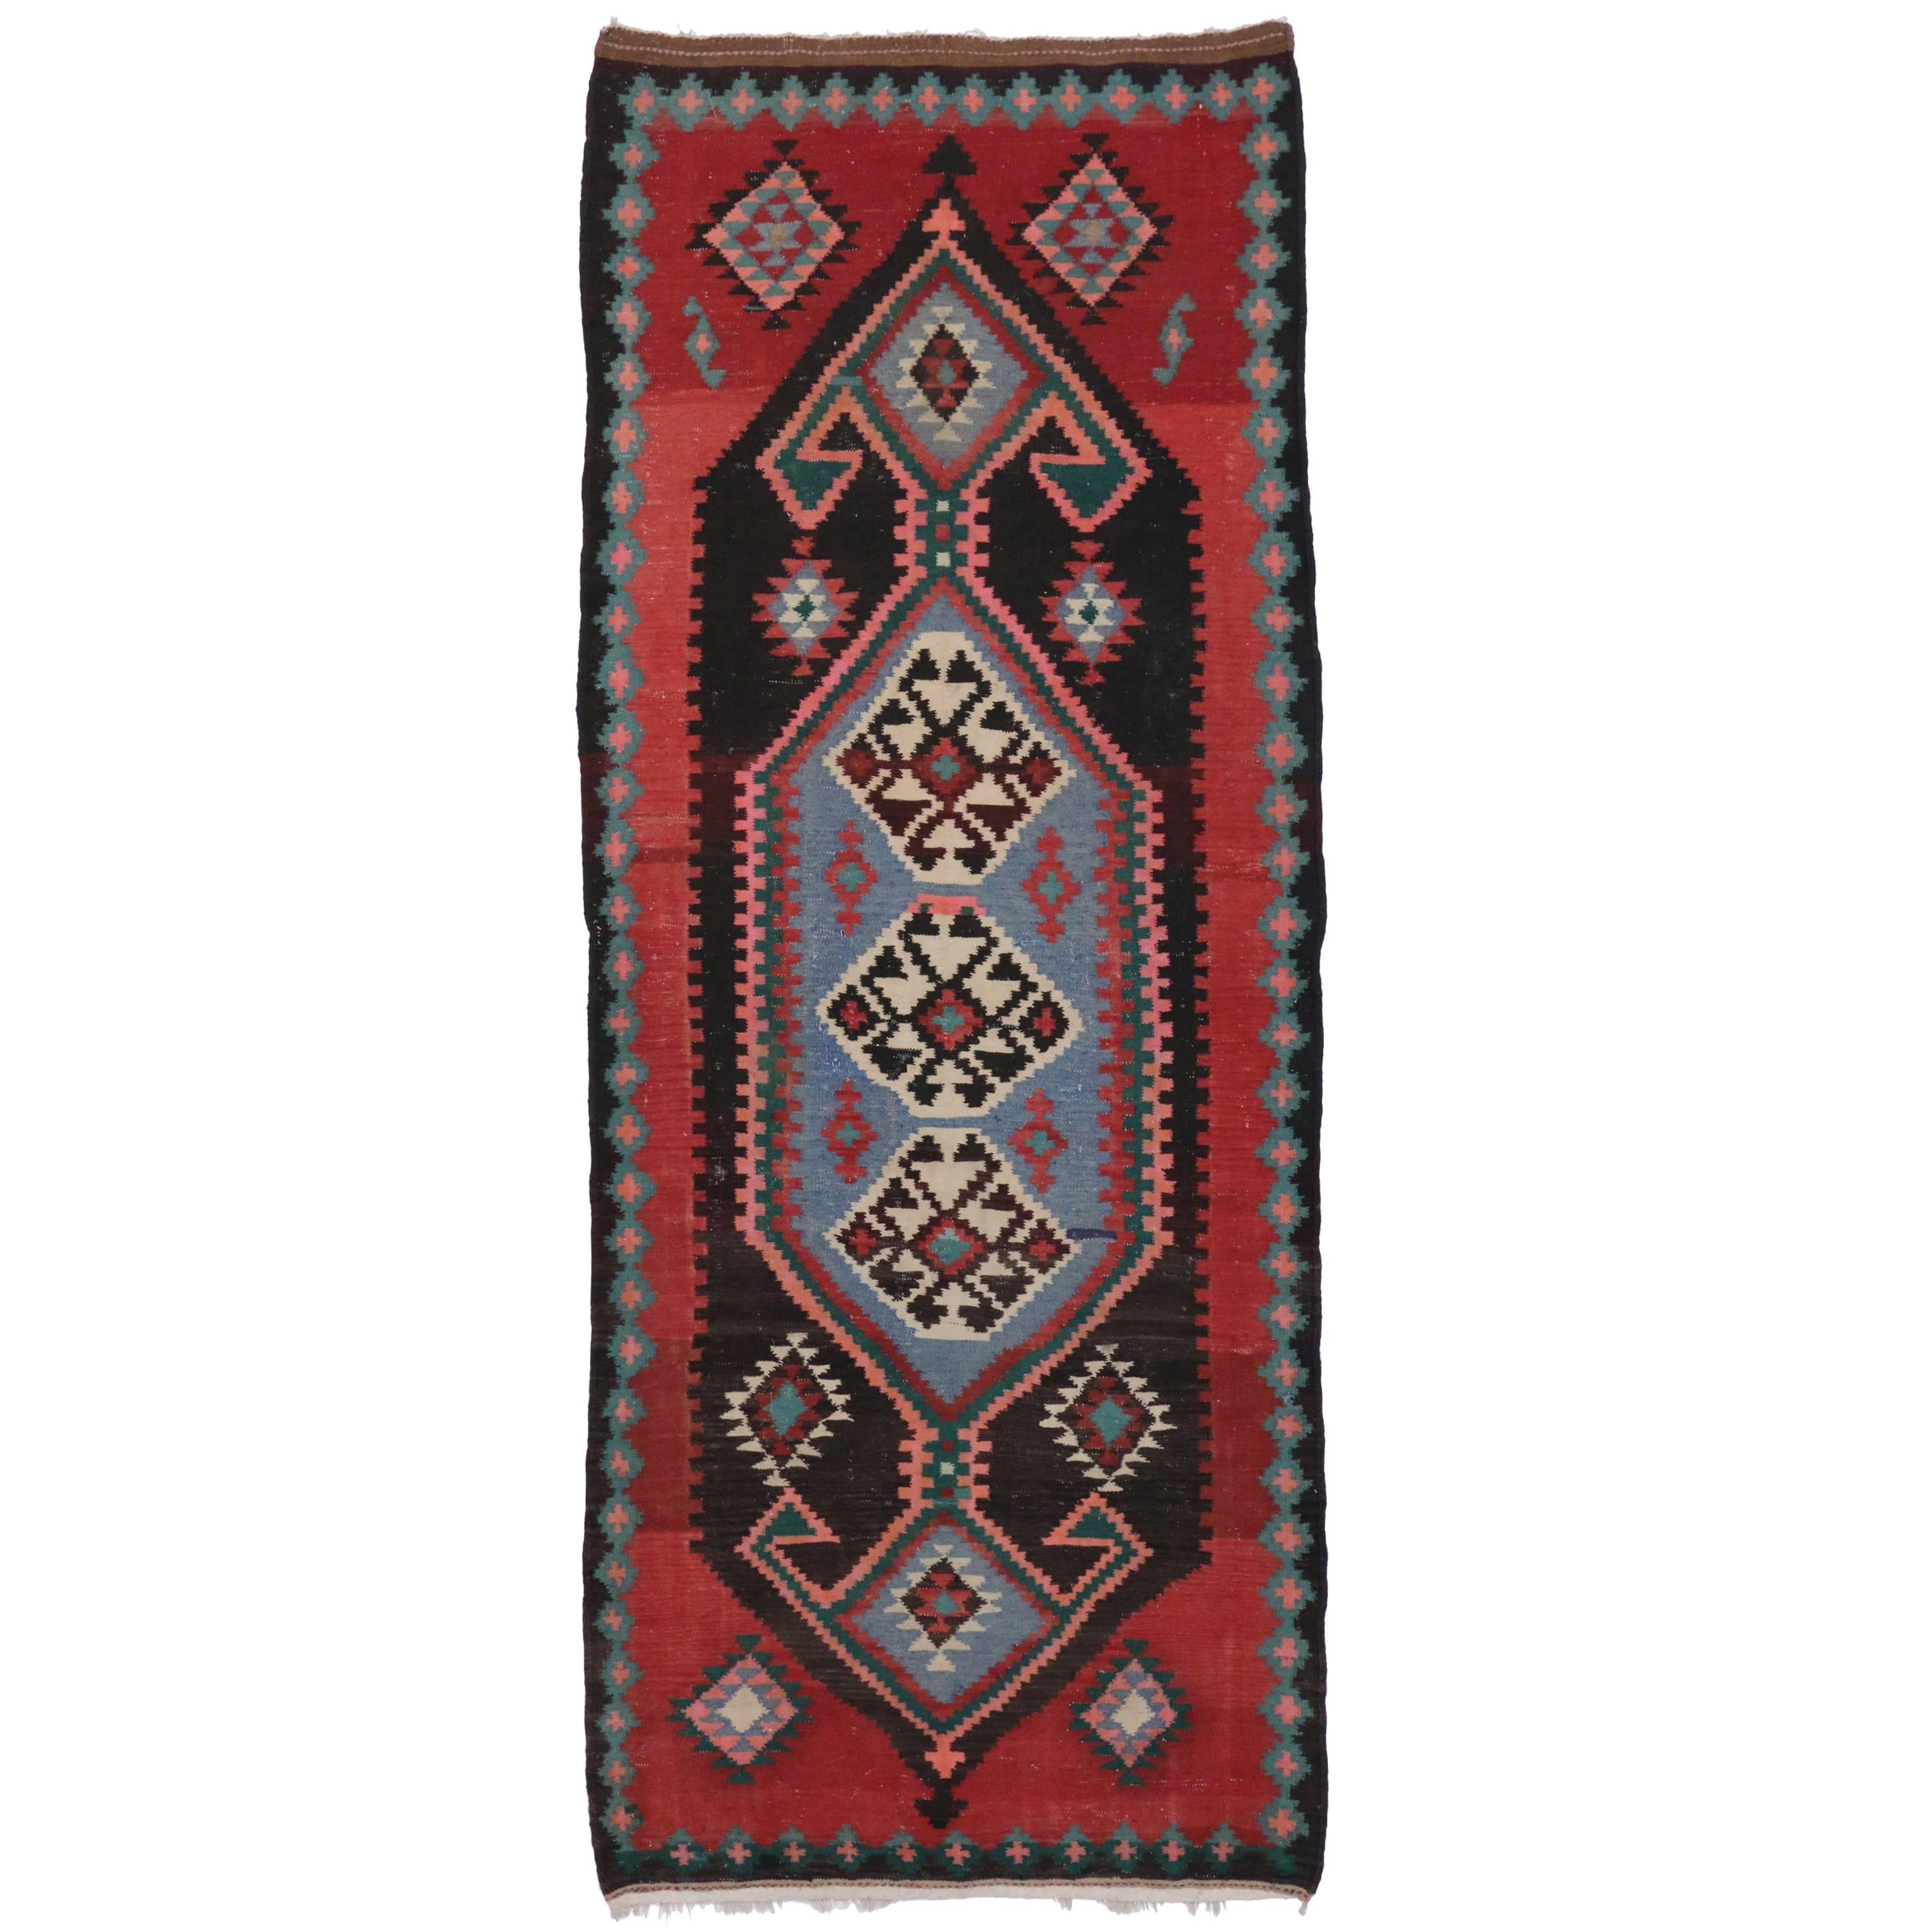 Vintage Persian Tribal Kilim Rug with Modern Style, Kilim Runner